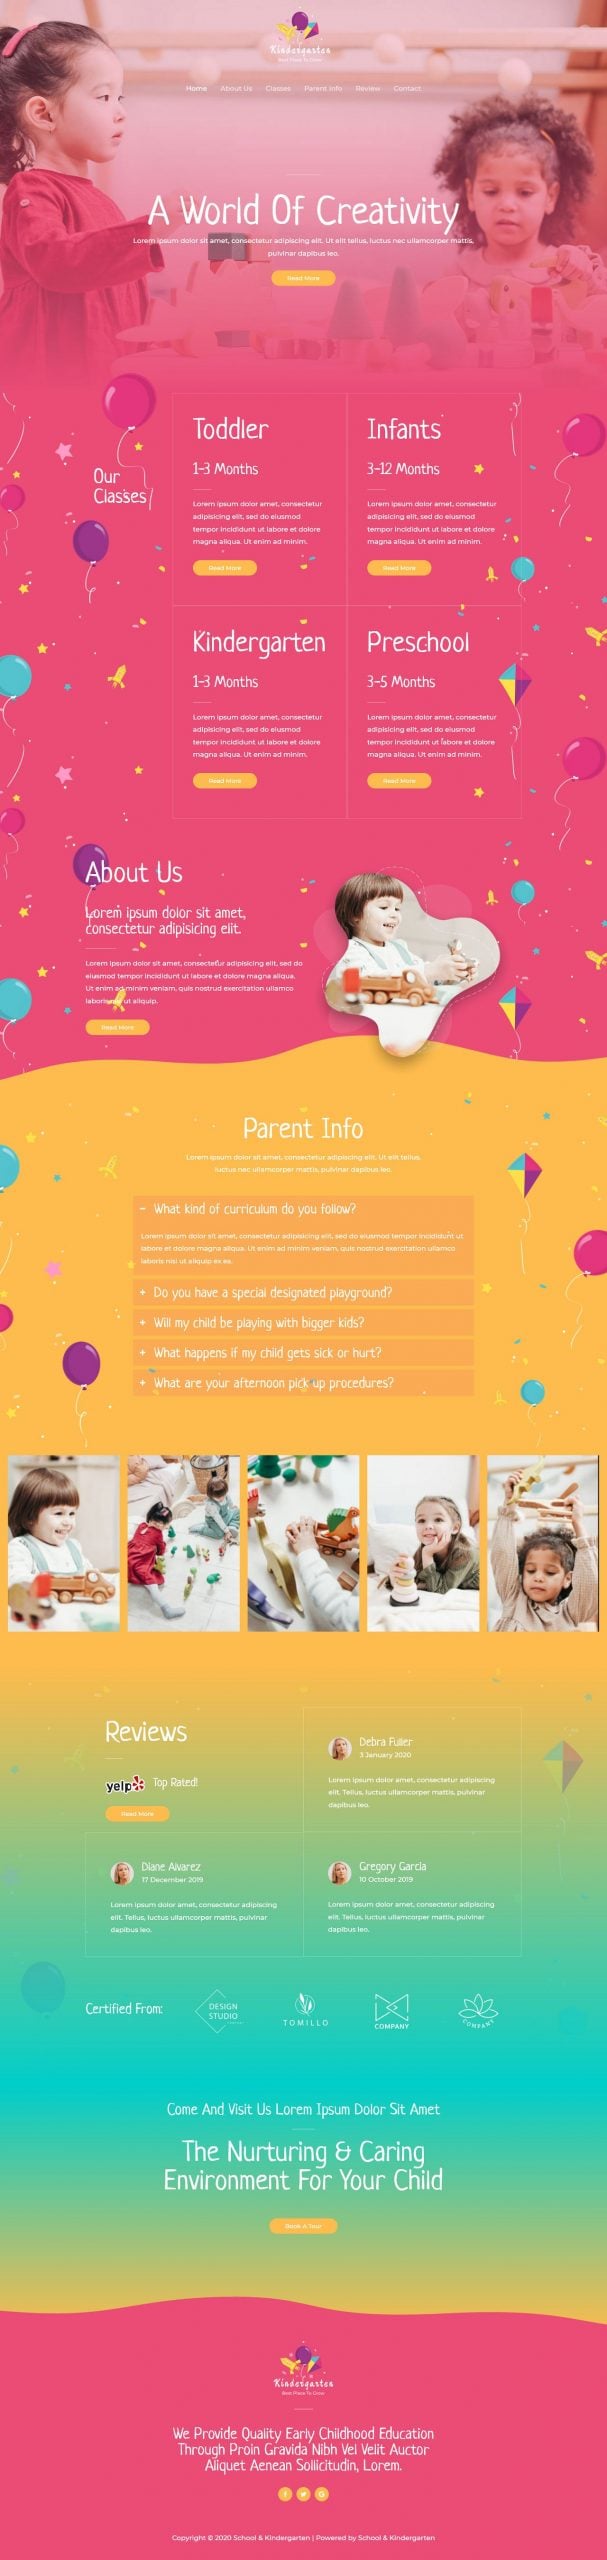 Fagowi.com Website Design Templates For Kindergarten PreSchool - Home Page Image